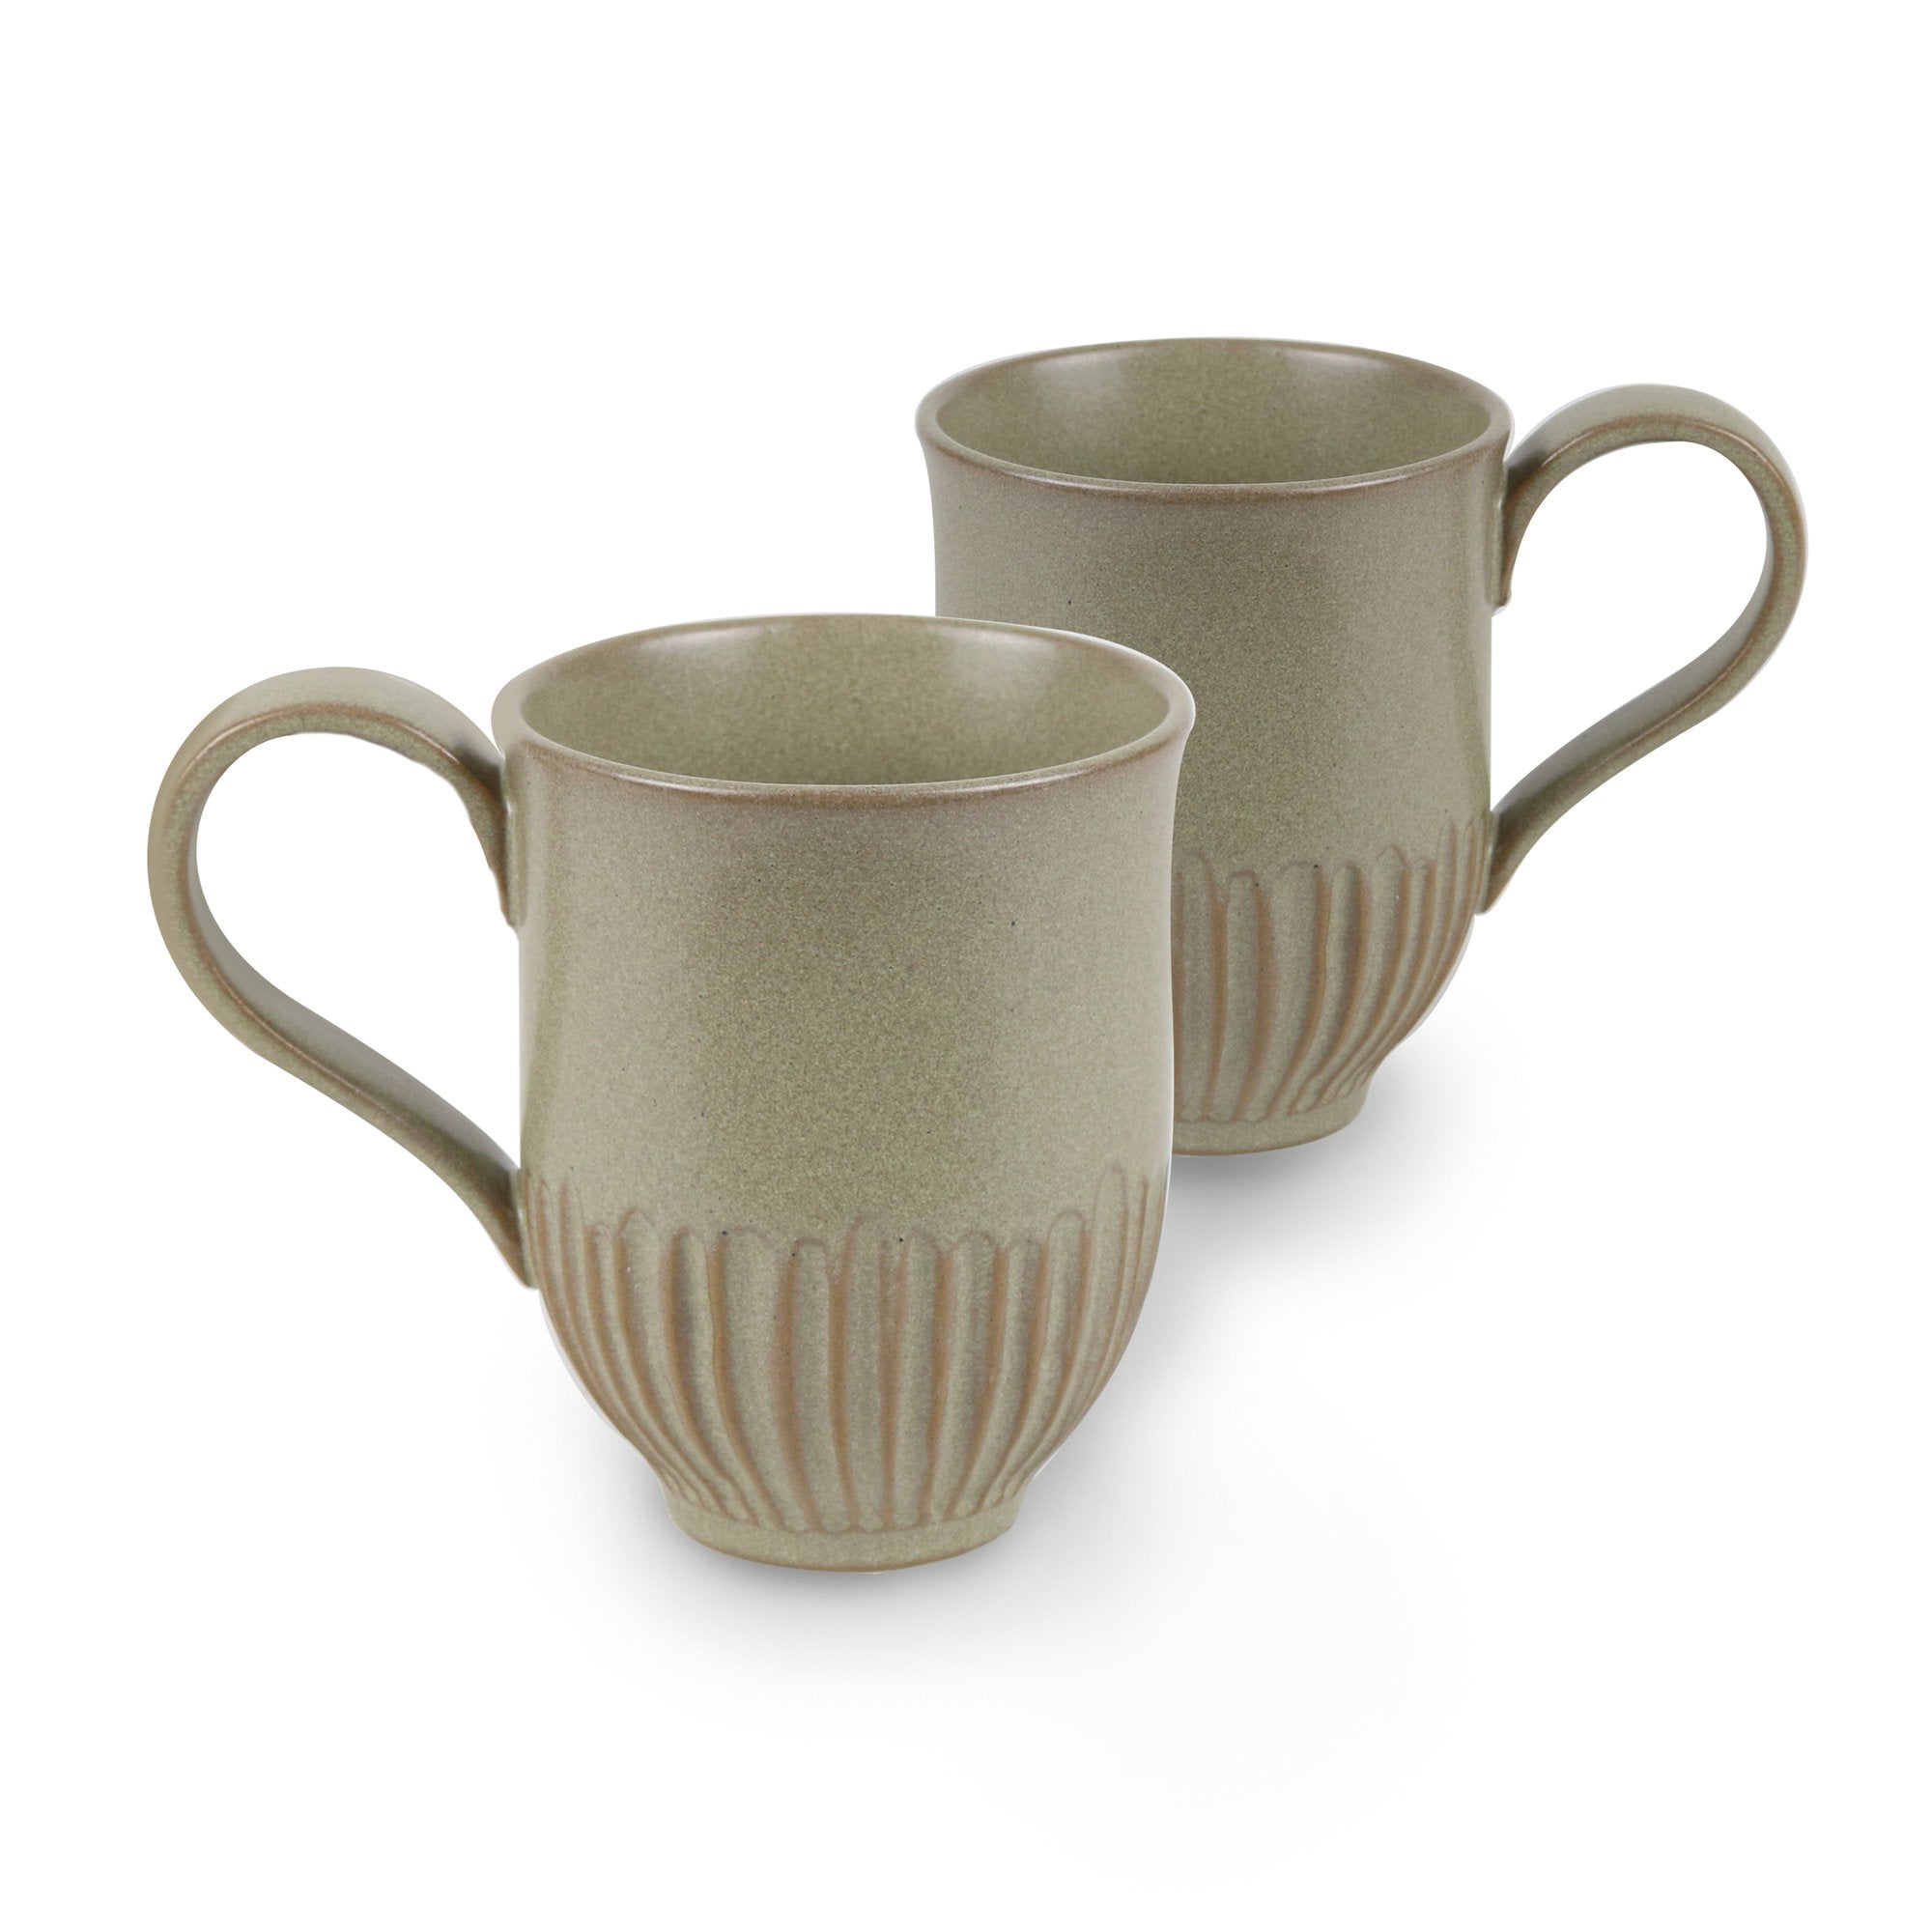 Olive Crafted Mug 2Pc